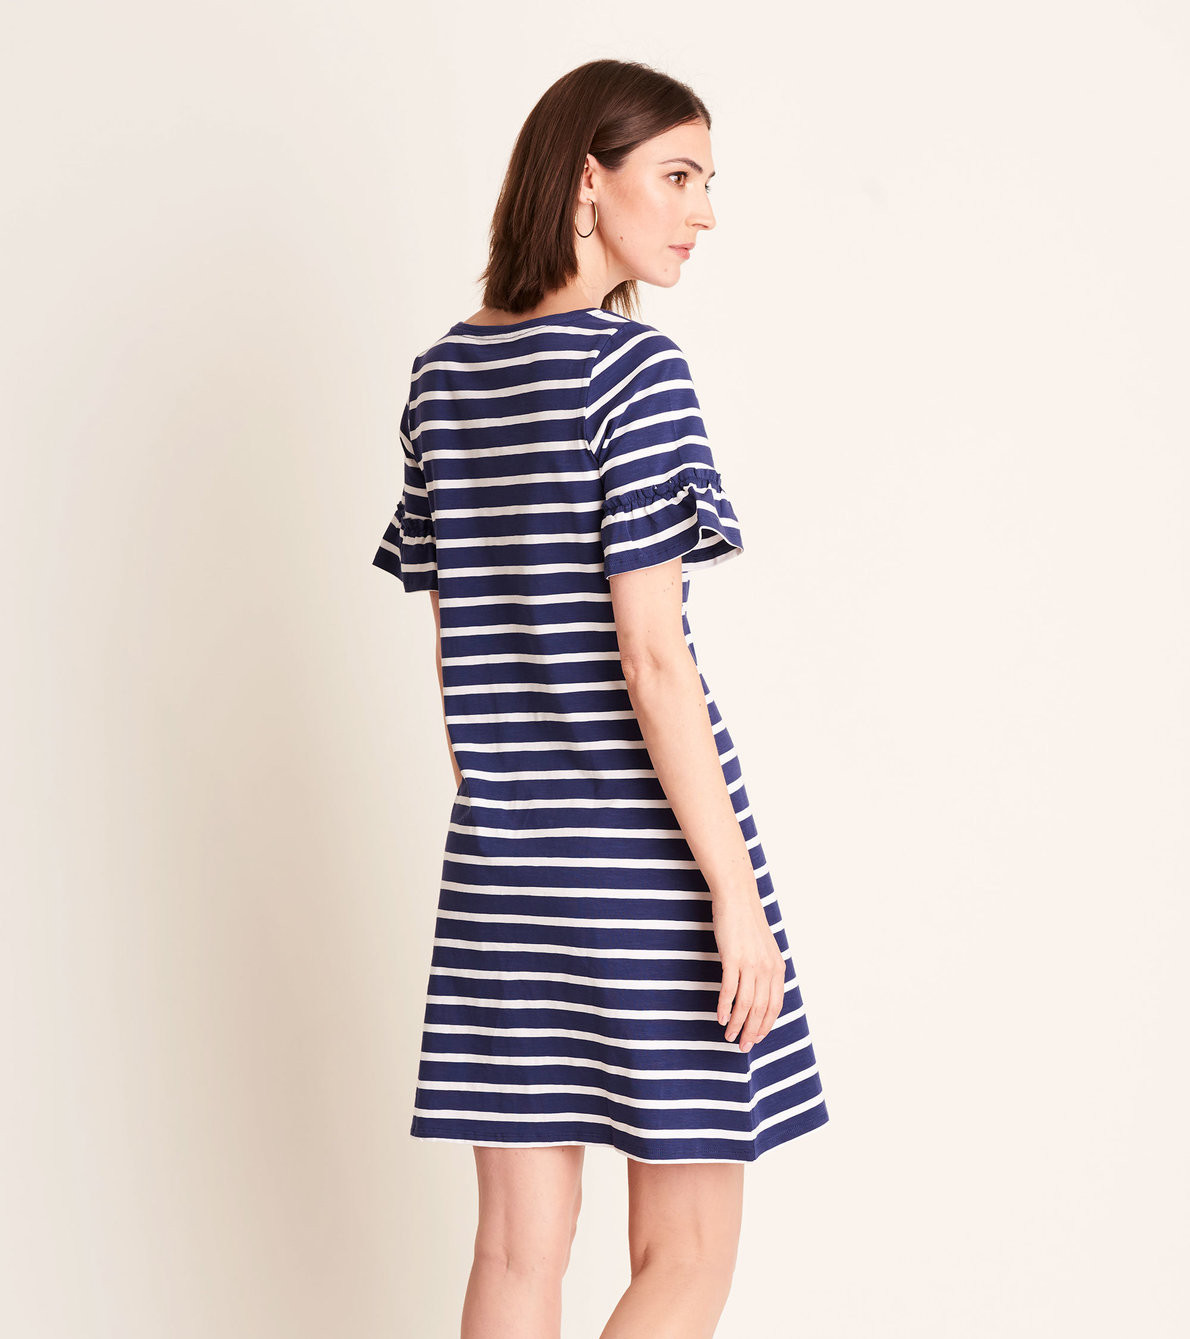 View larger image of Kelli Dress - Patriot Blue Stripes